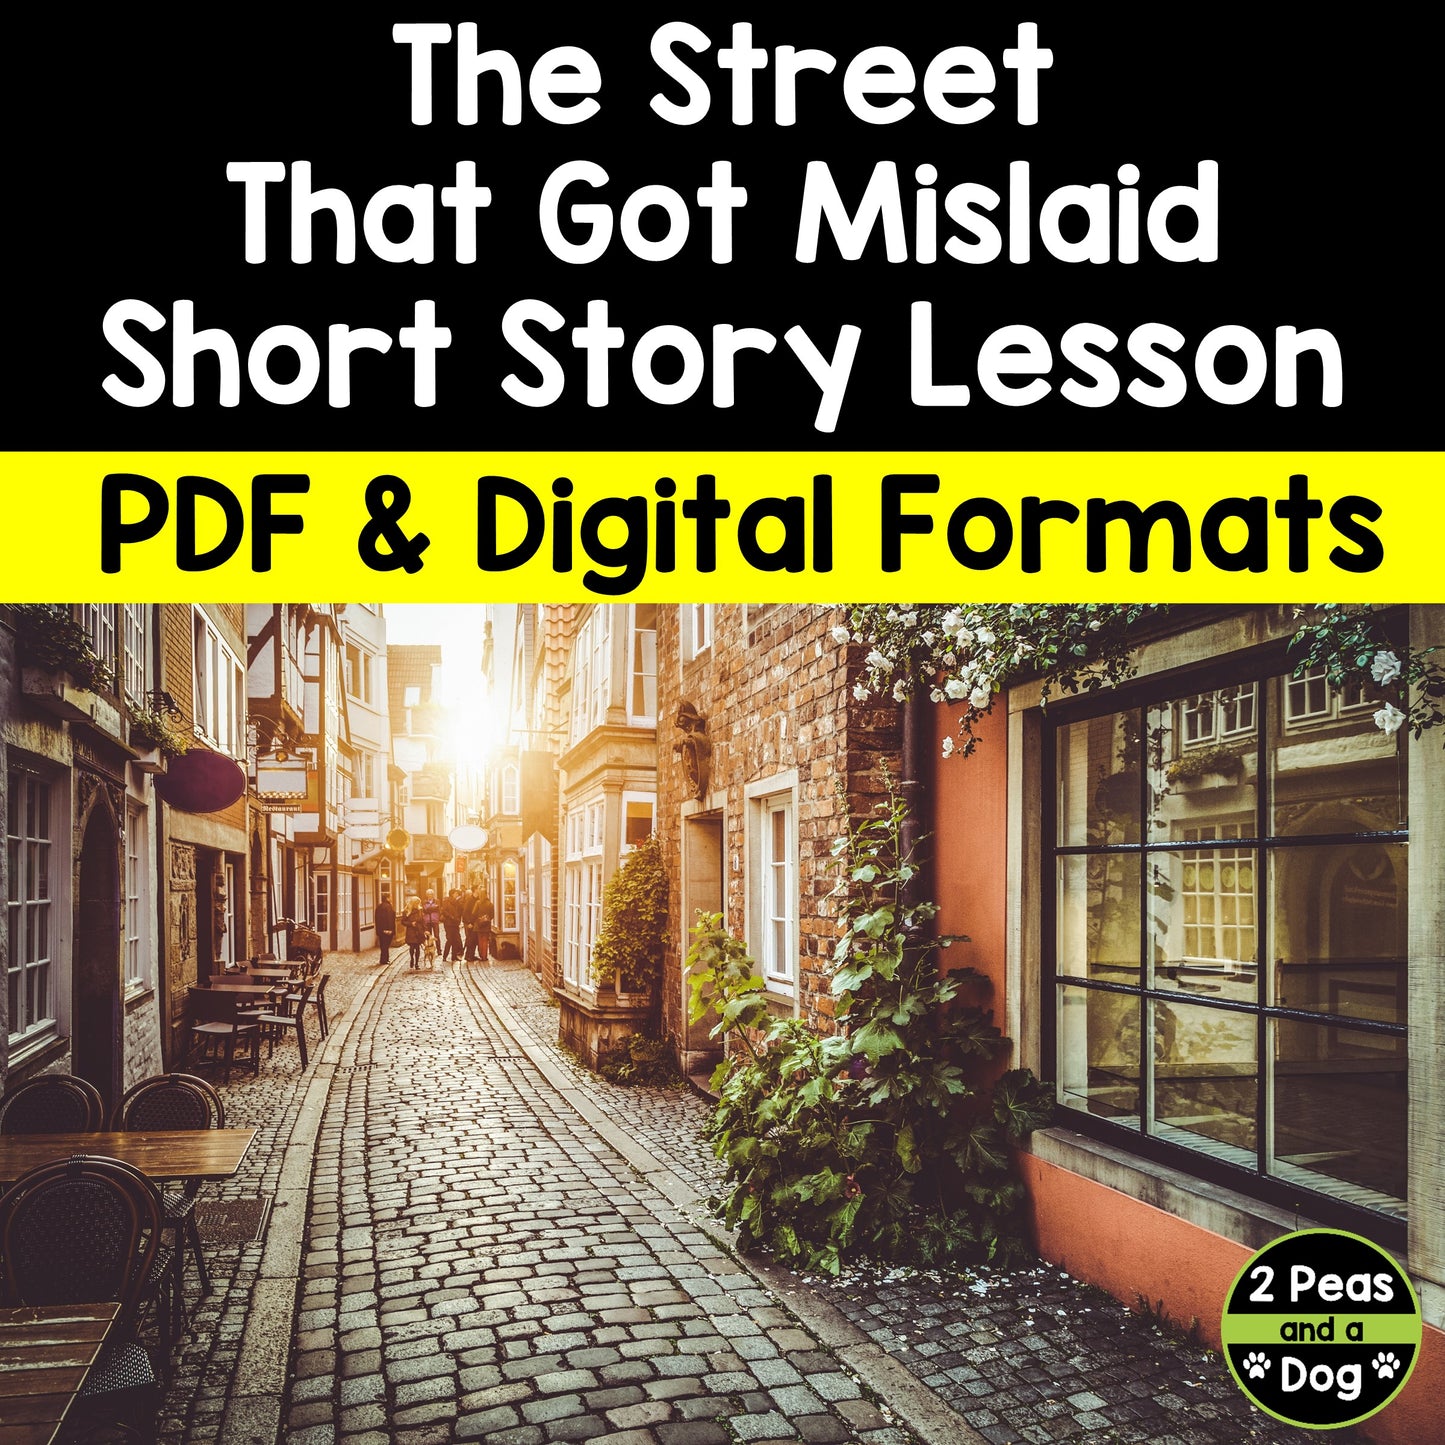 The Street That Got Mislaid Short Story Lesson